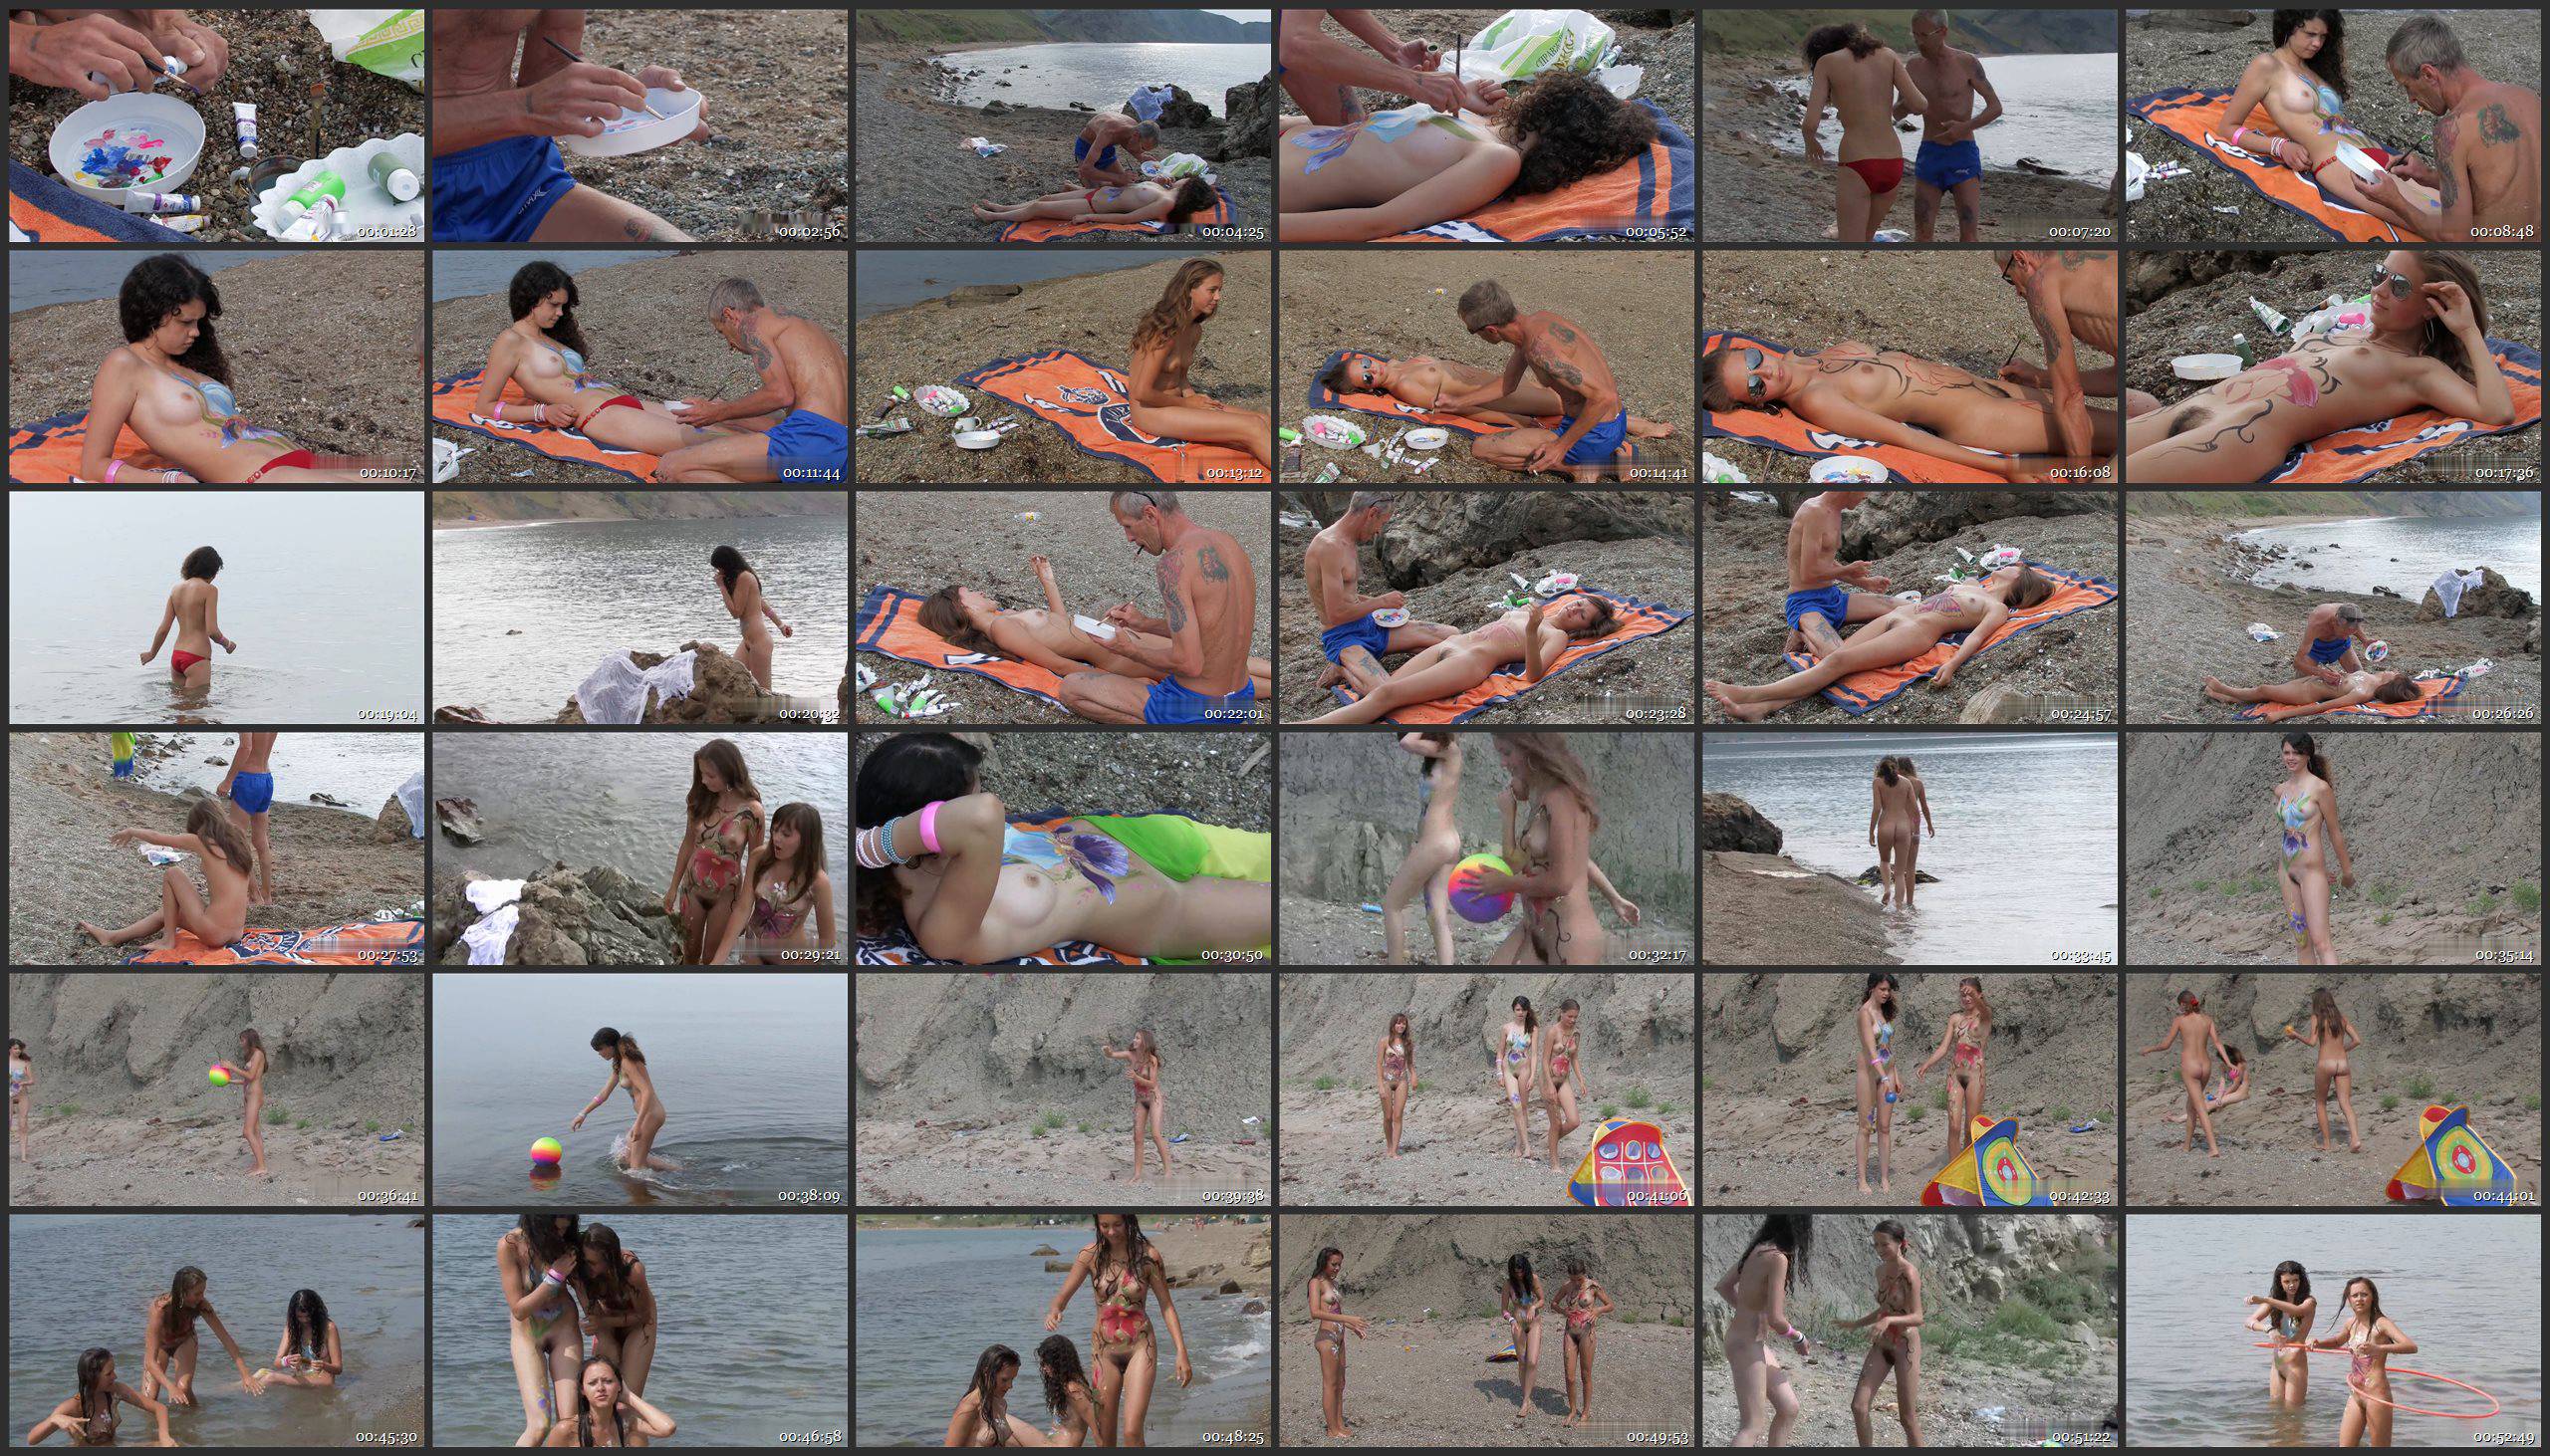 Candid-HD Videos Body Art Nudist Beach. Part 1 - Thumbnails